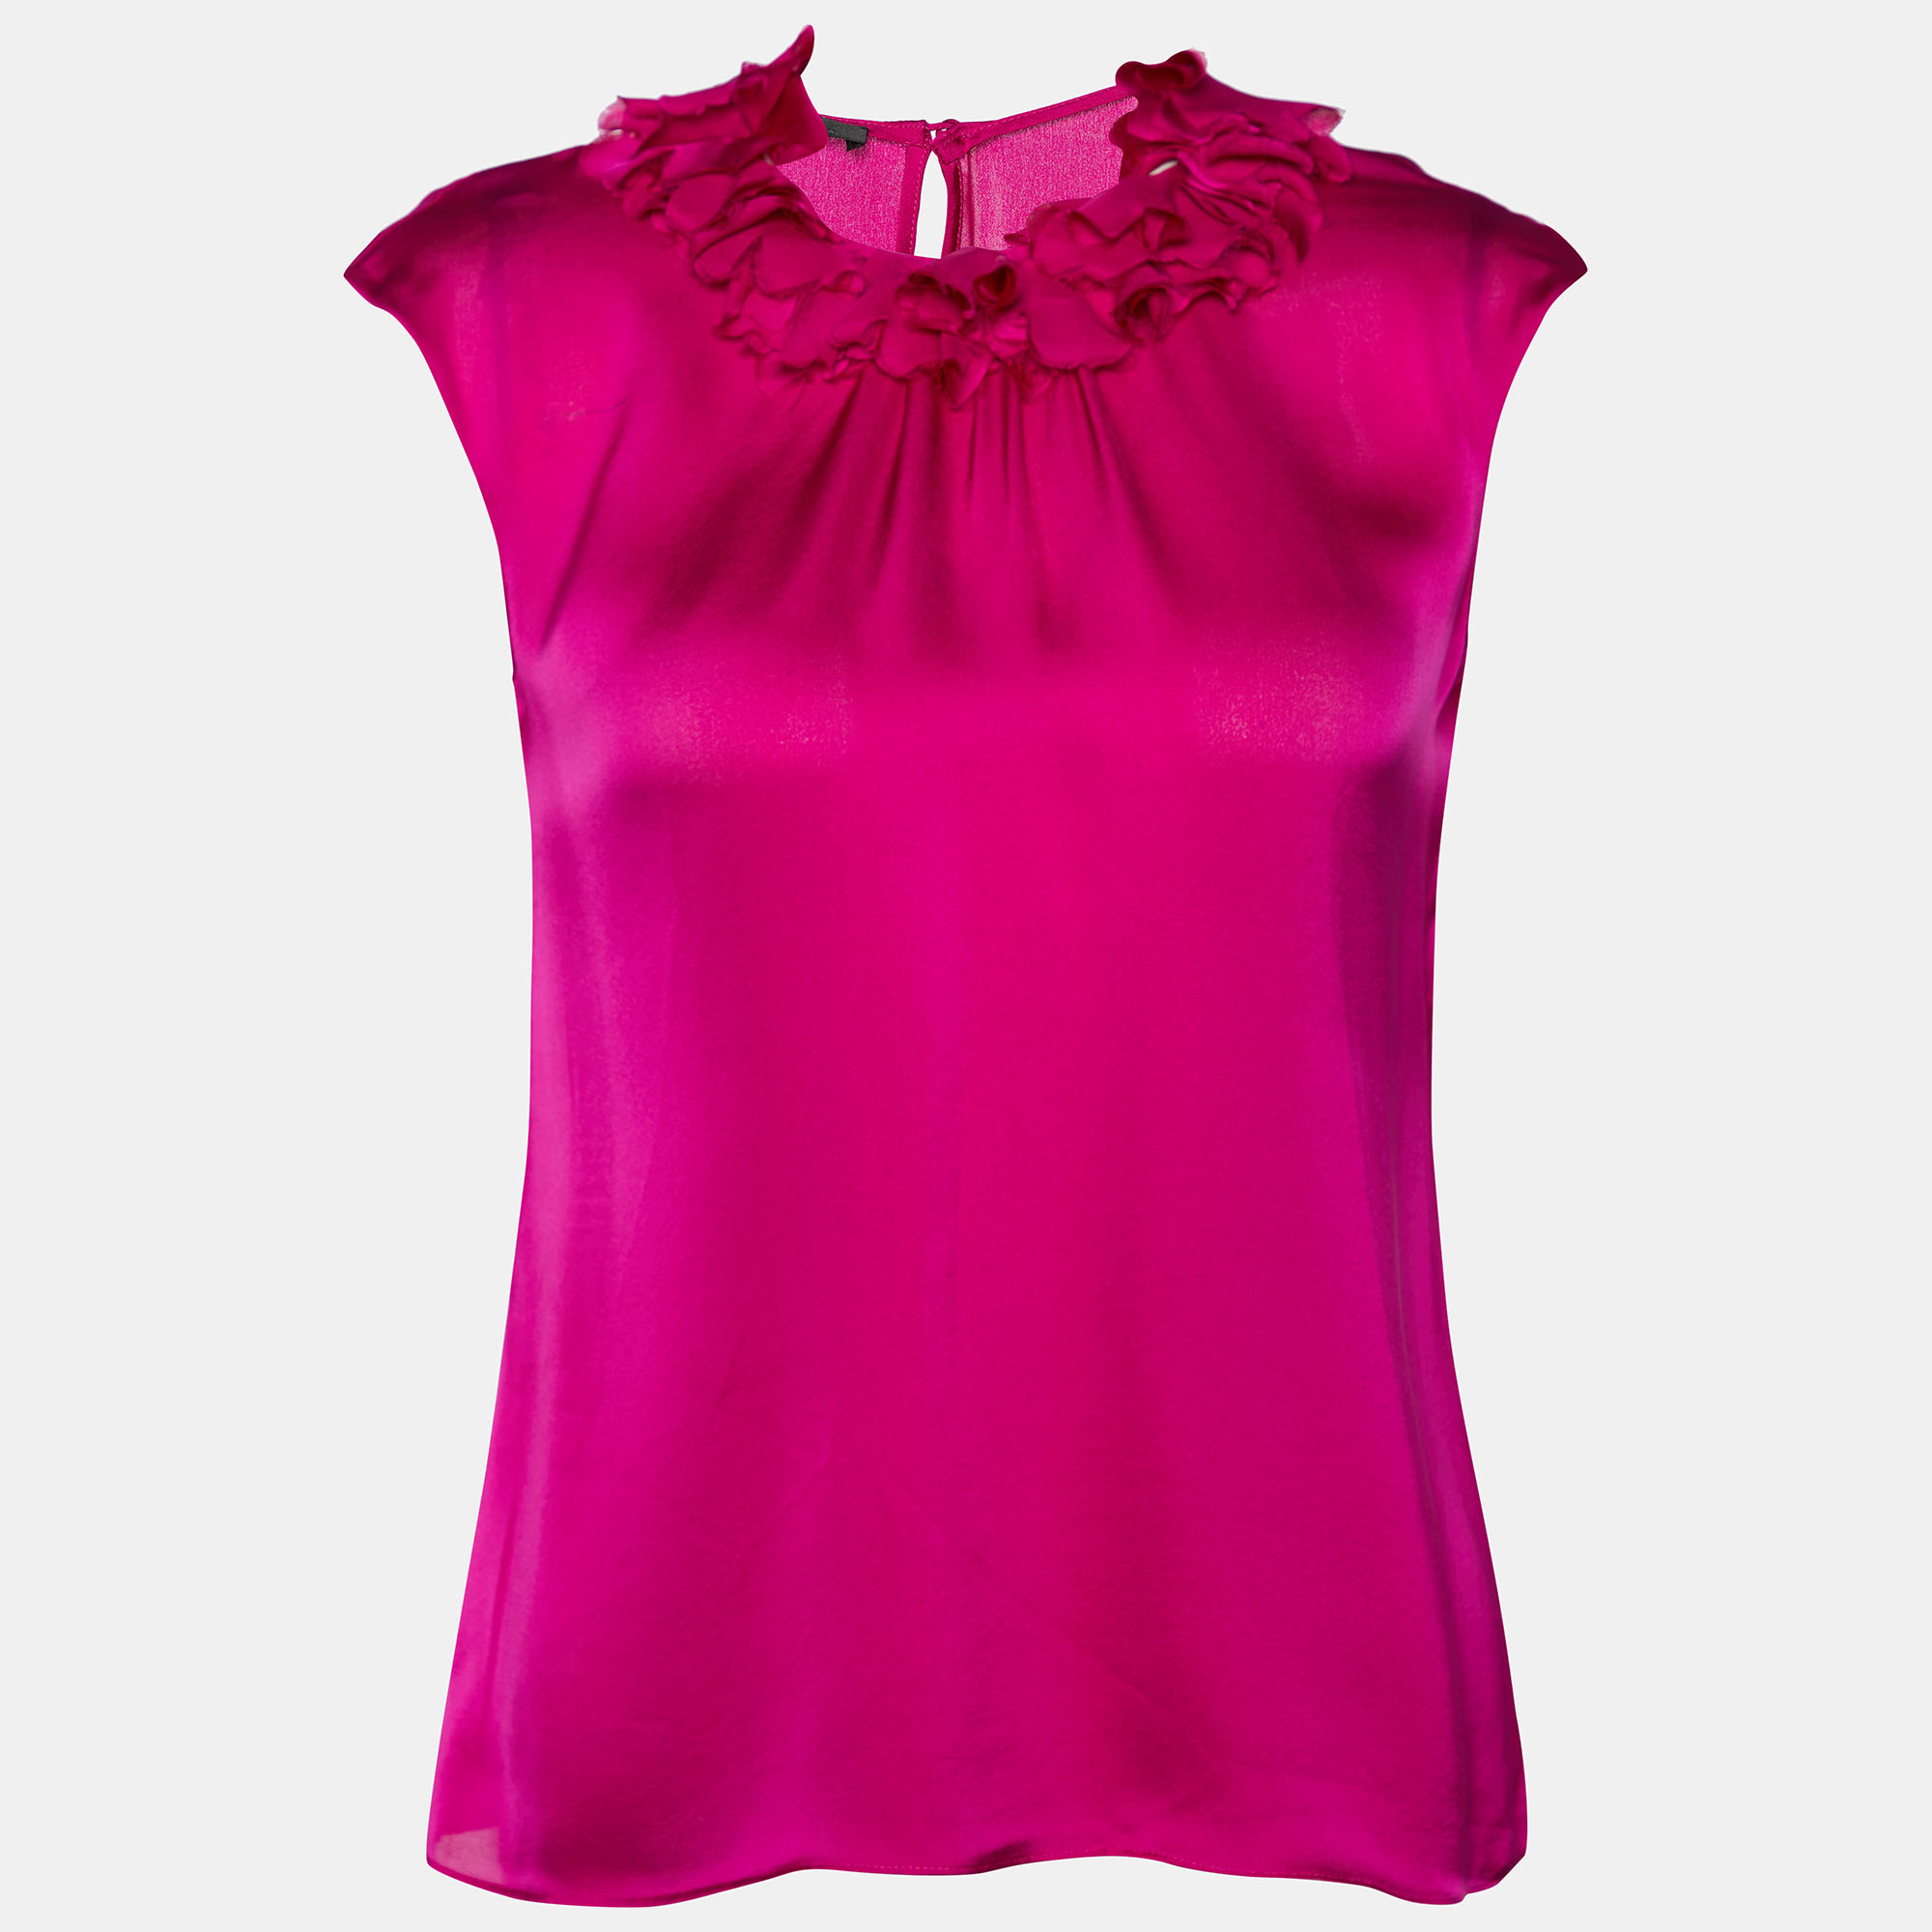 designer pink top for women